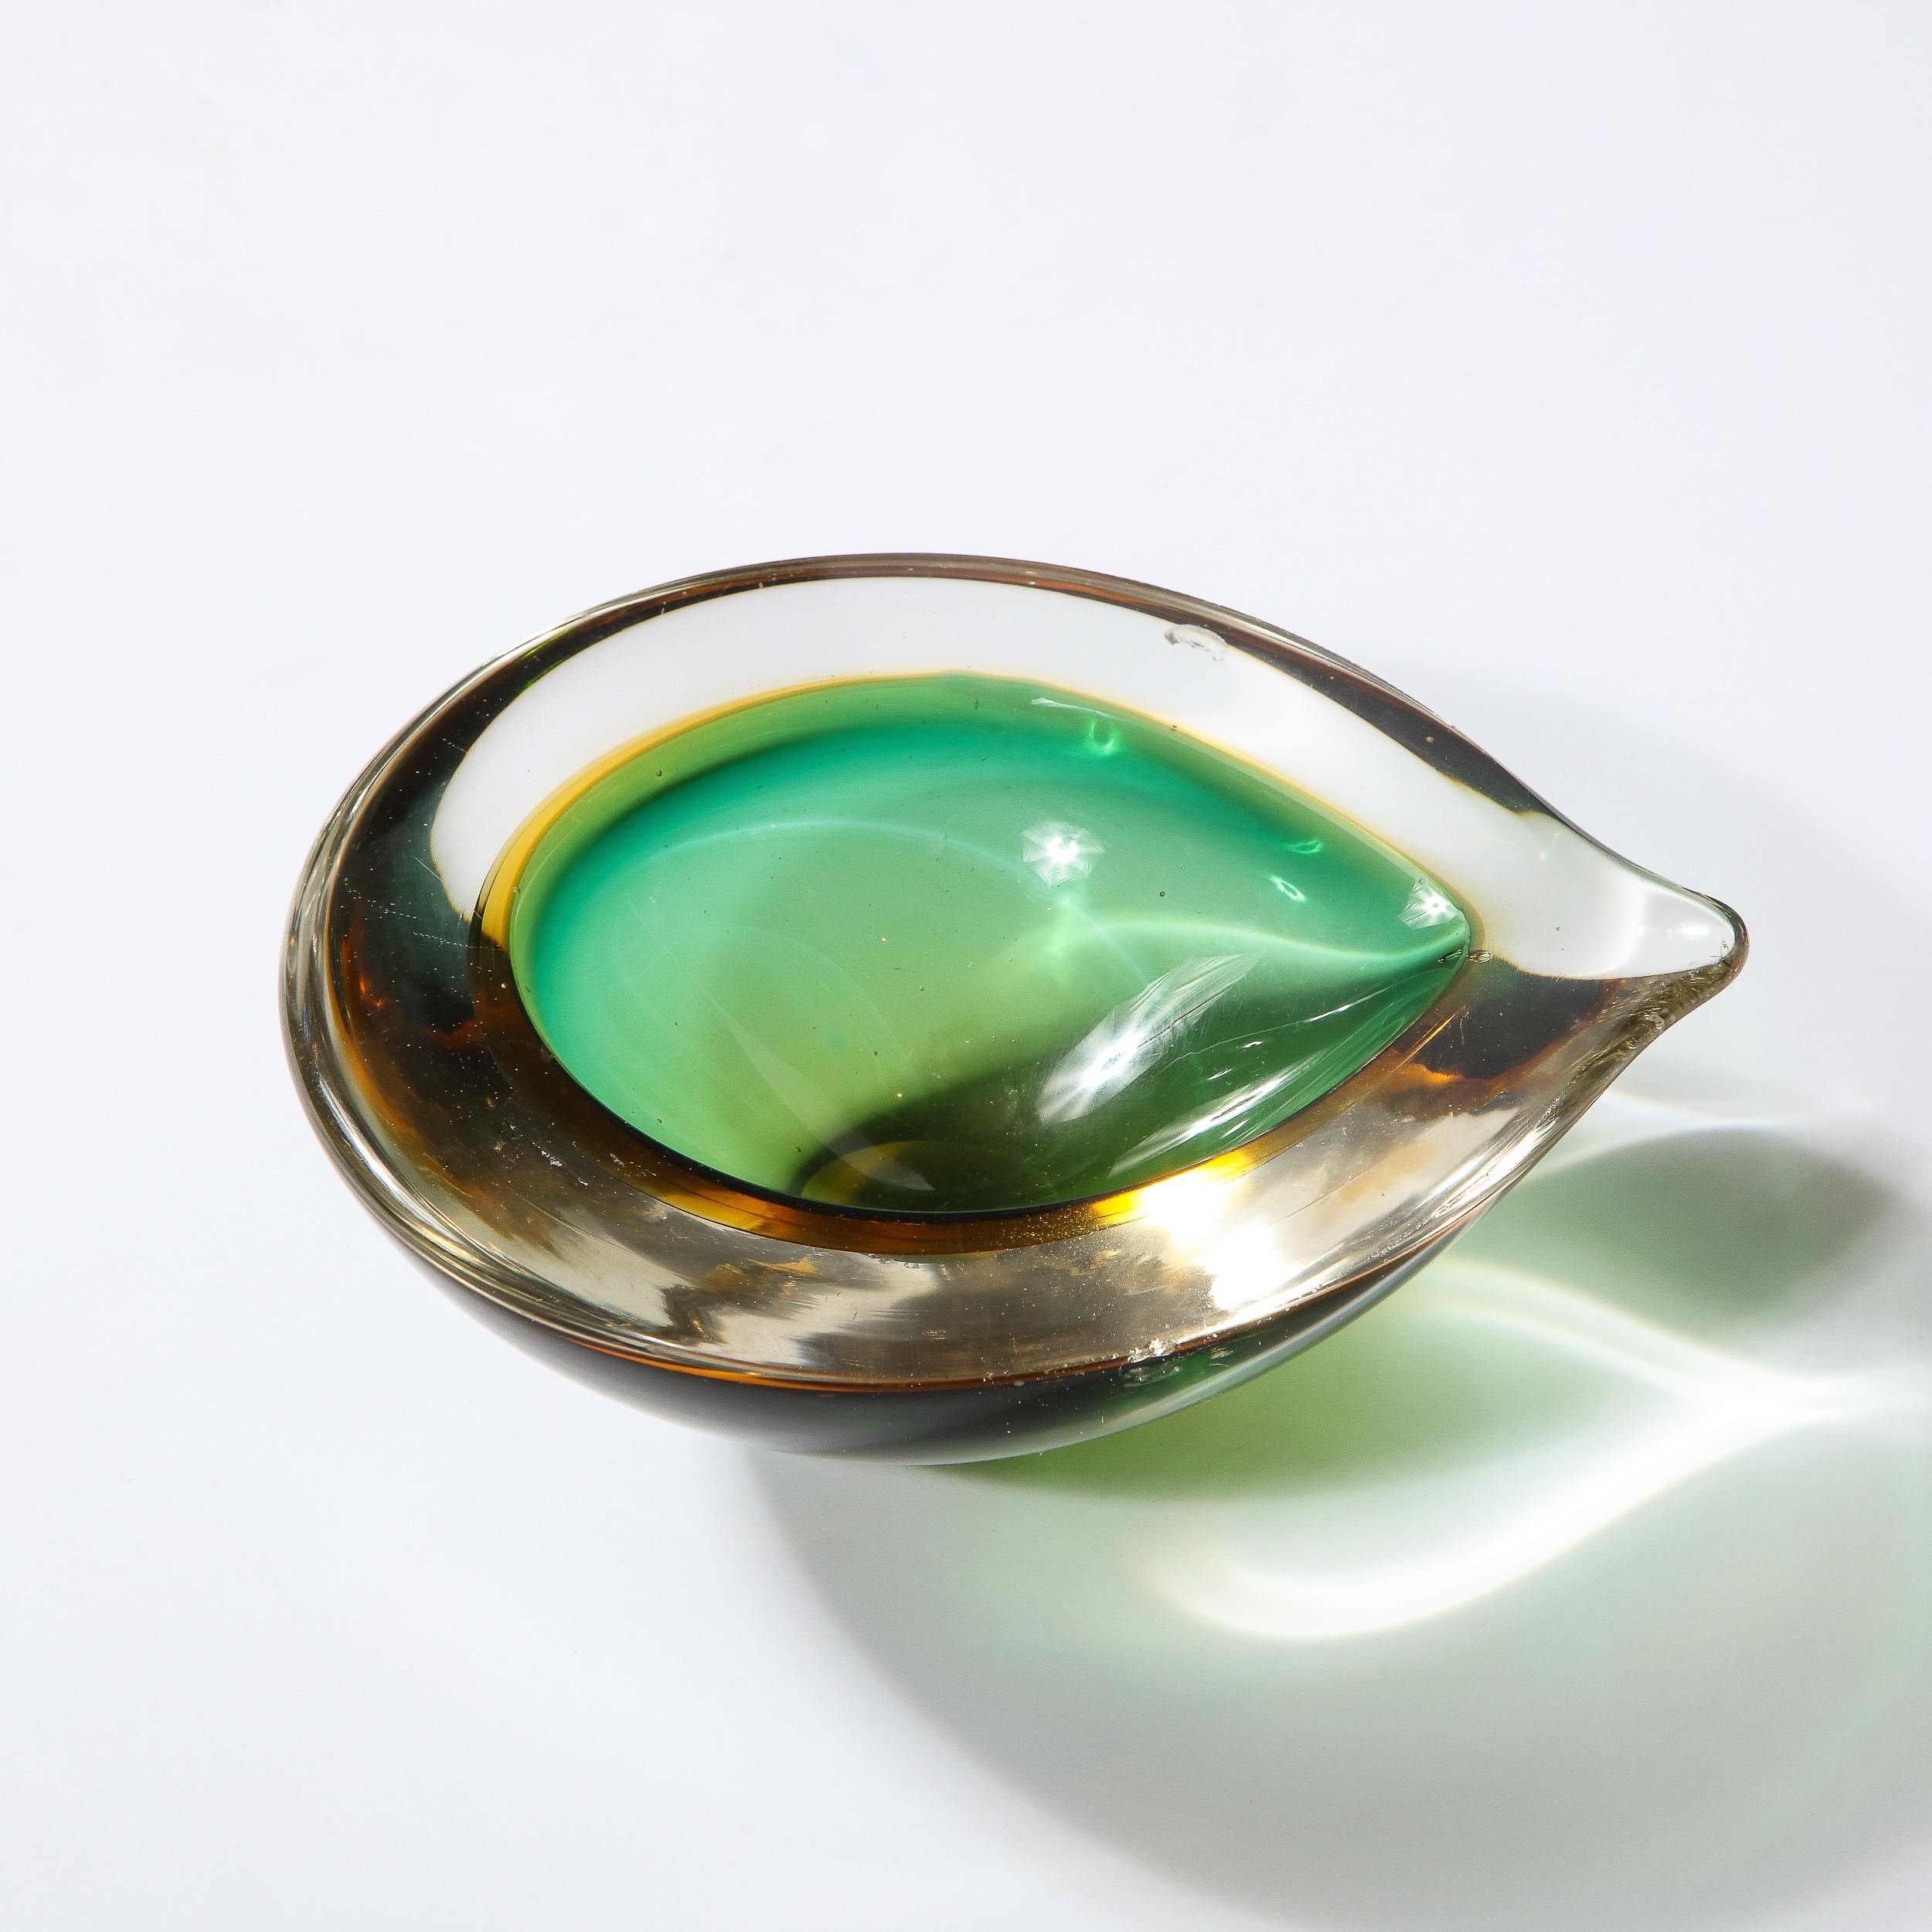 Italian Mid-Century Modern Handblown Ovoid Bowl in Citrine and Emerald